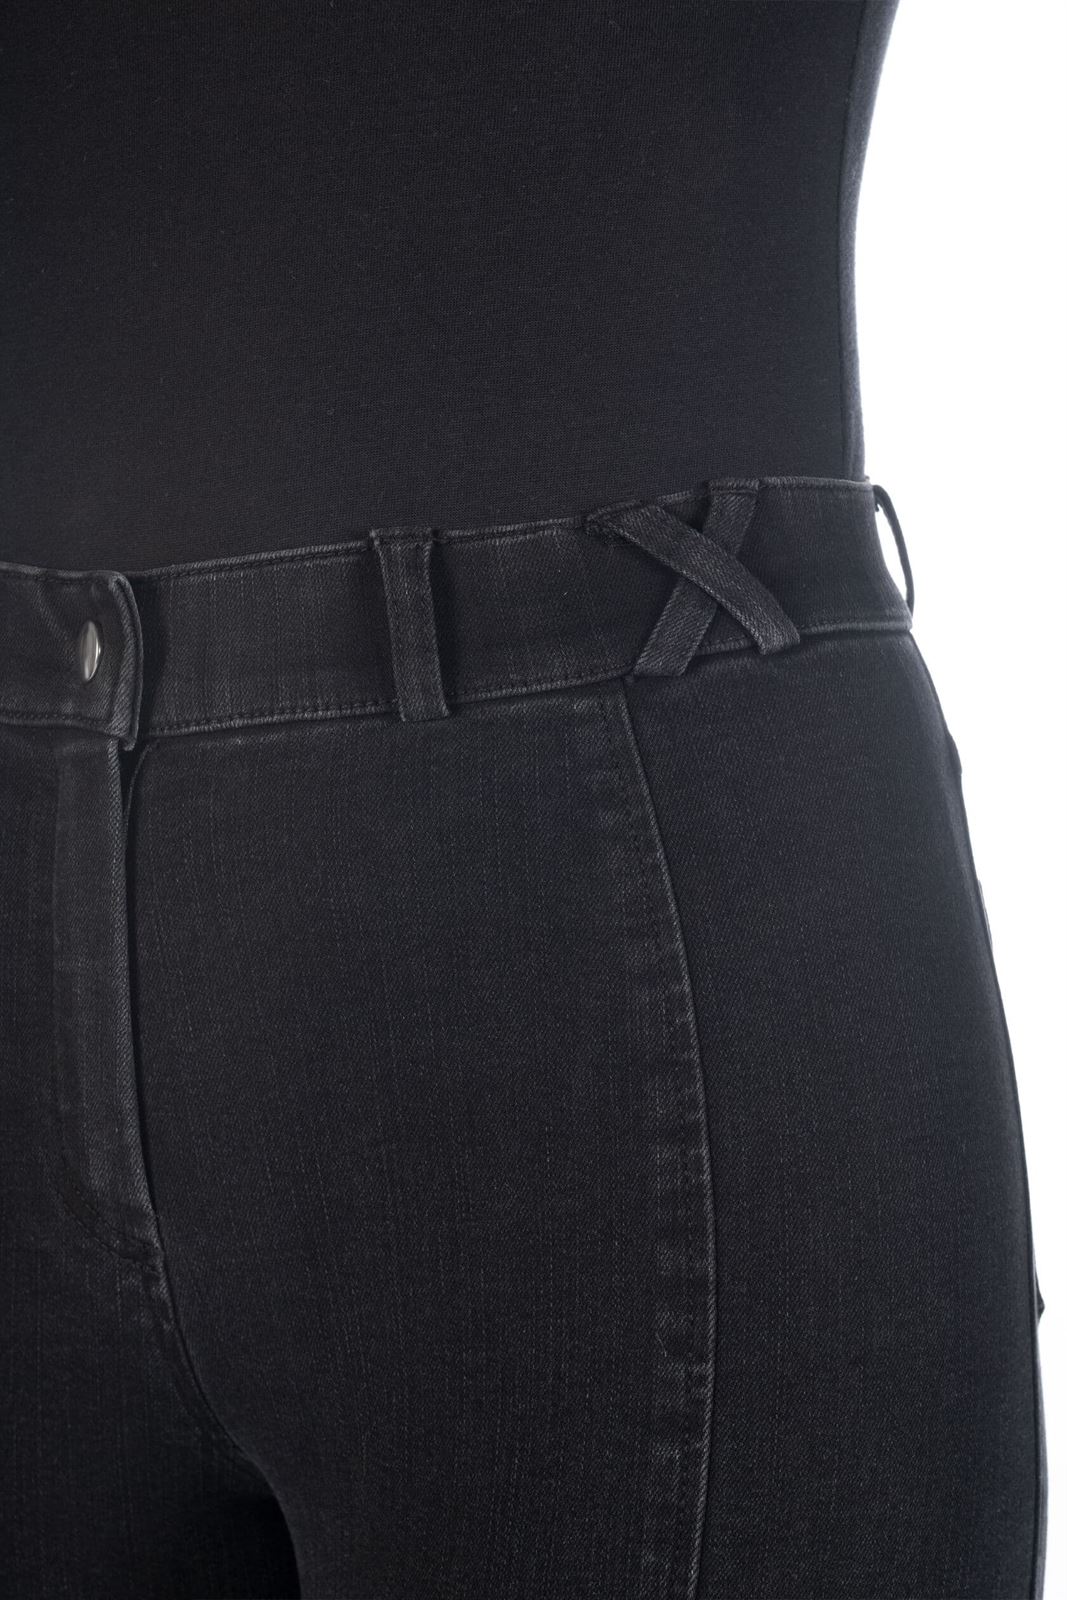 Pantalón mujer HKM Sports Equipment DENIM (vaquero) color negro rodilla grip - Imagen 9